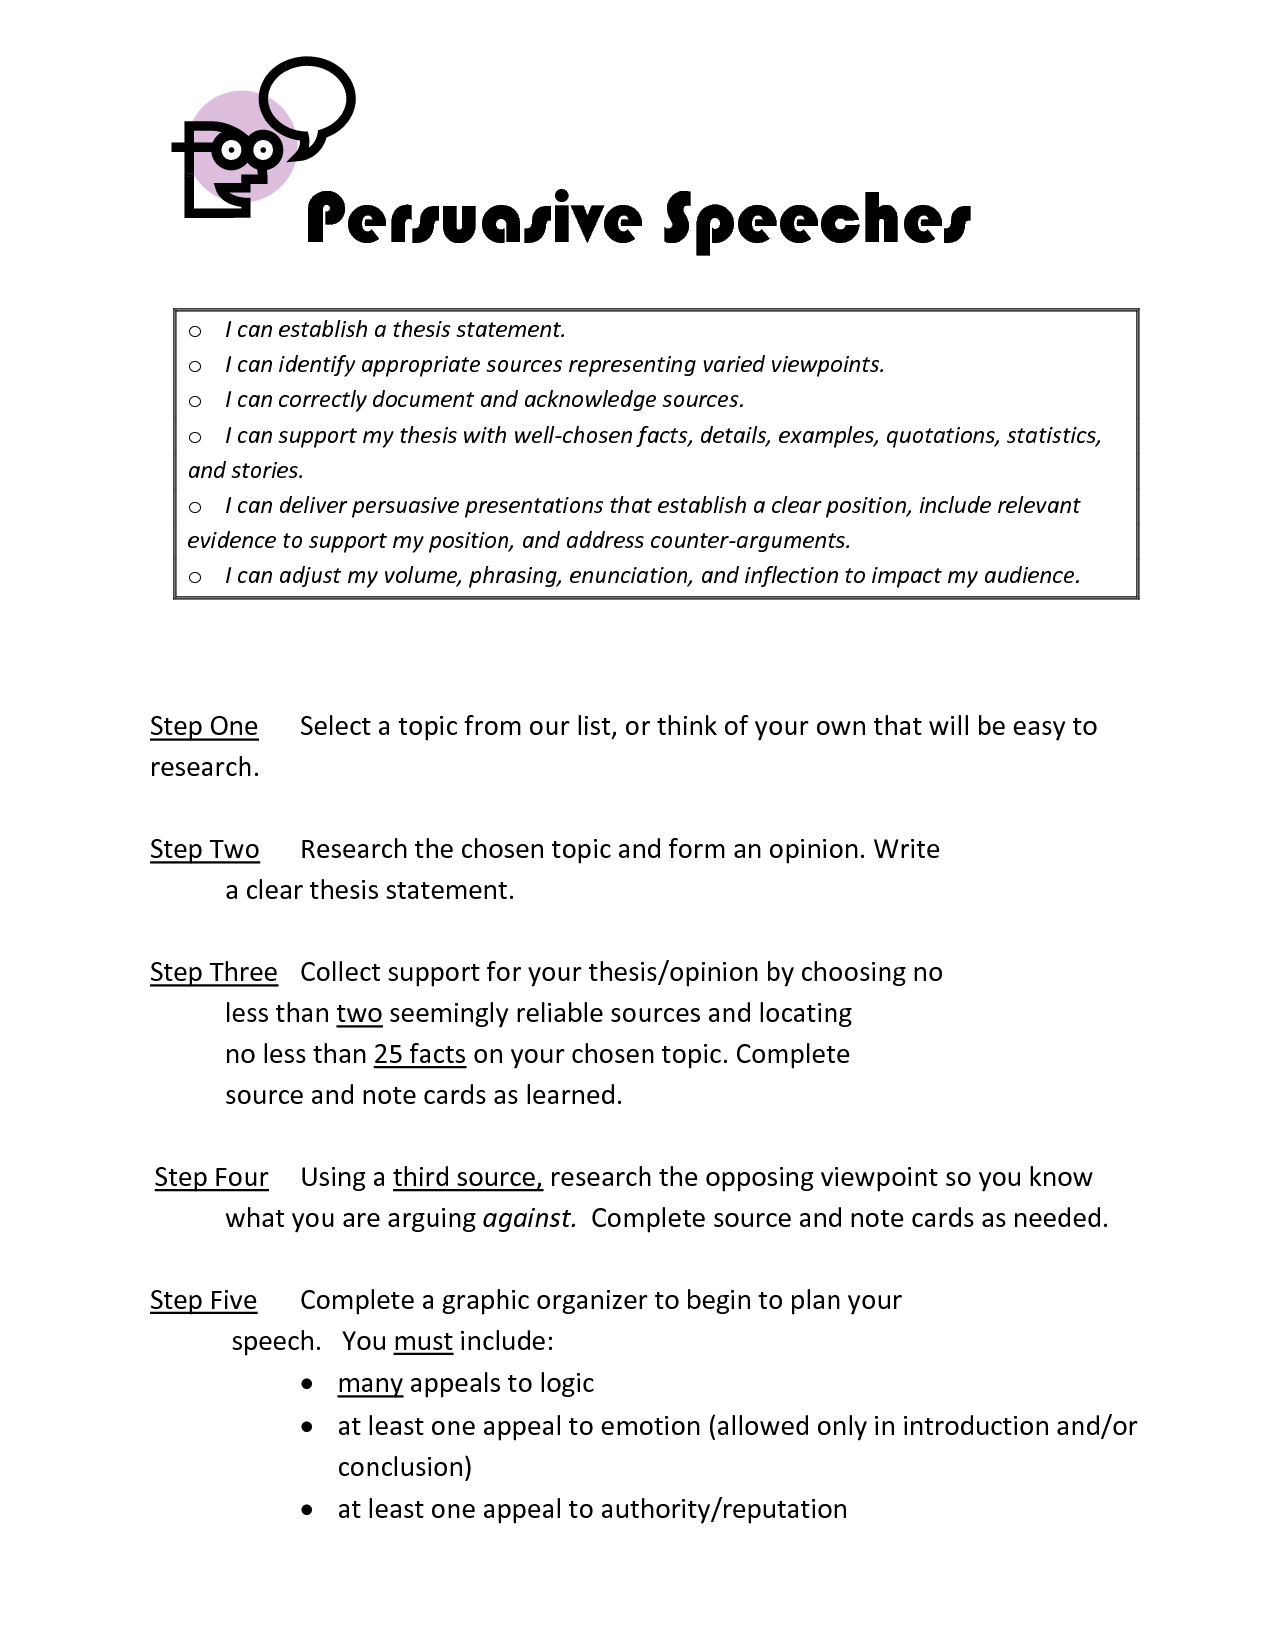 Persuasive speech on volunteer work essay